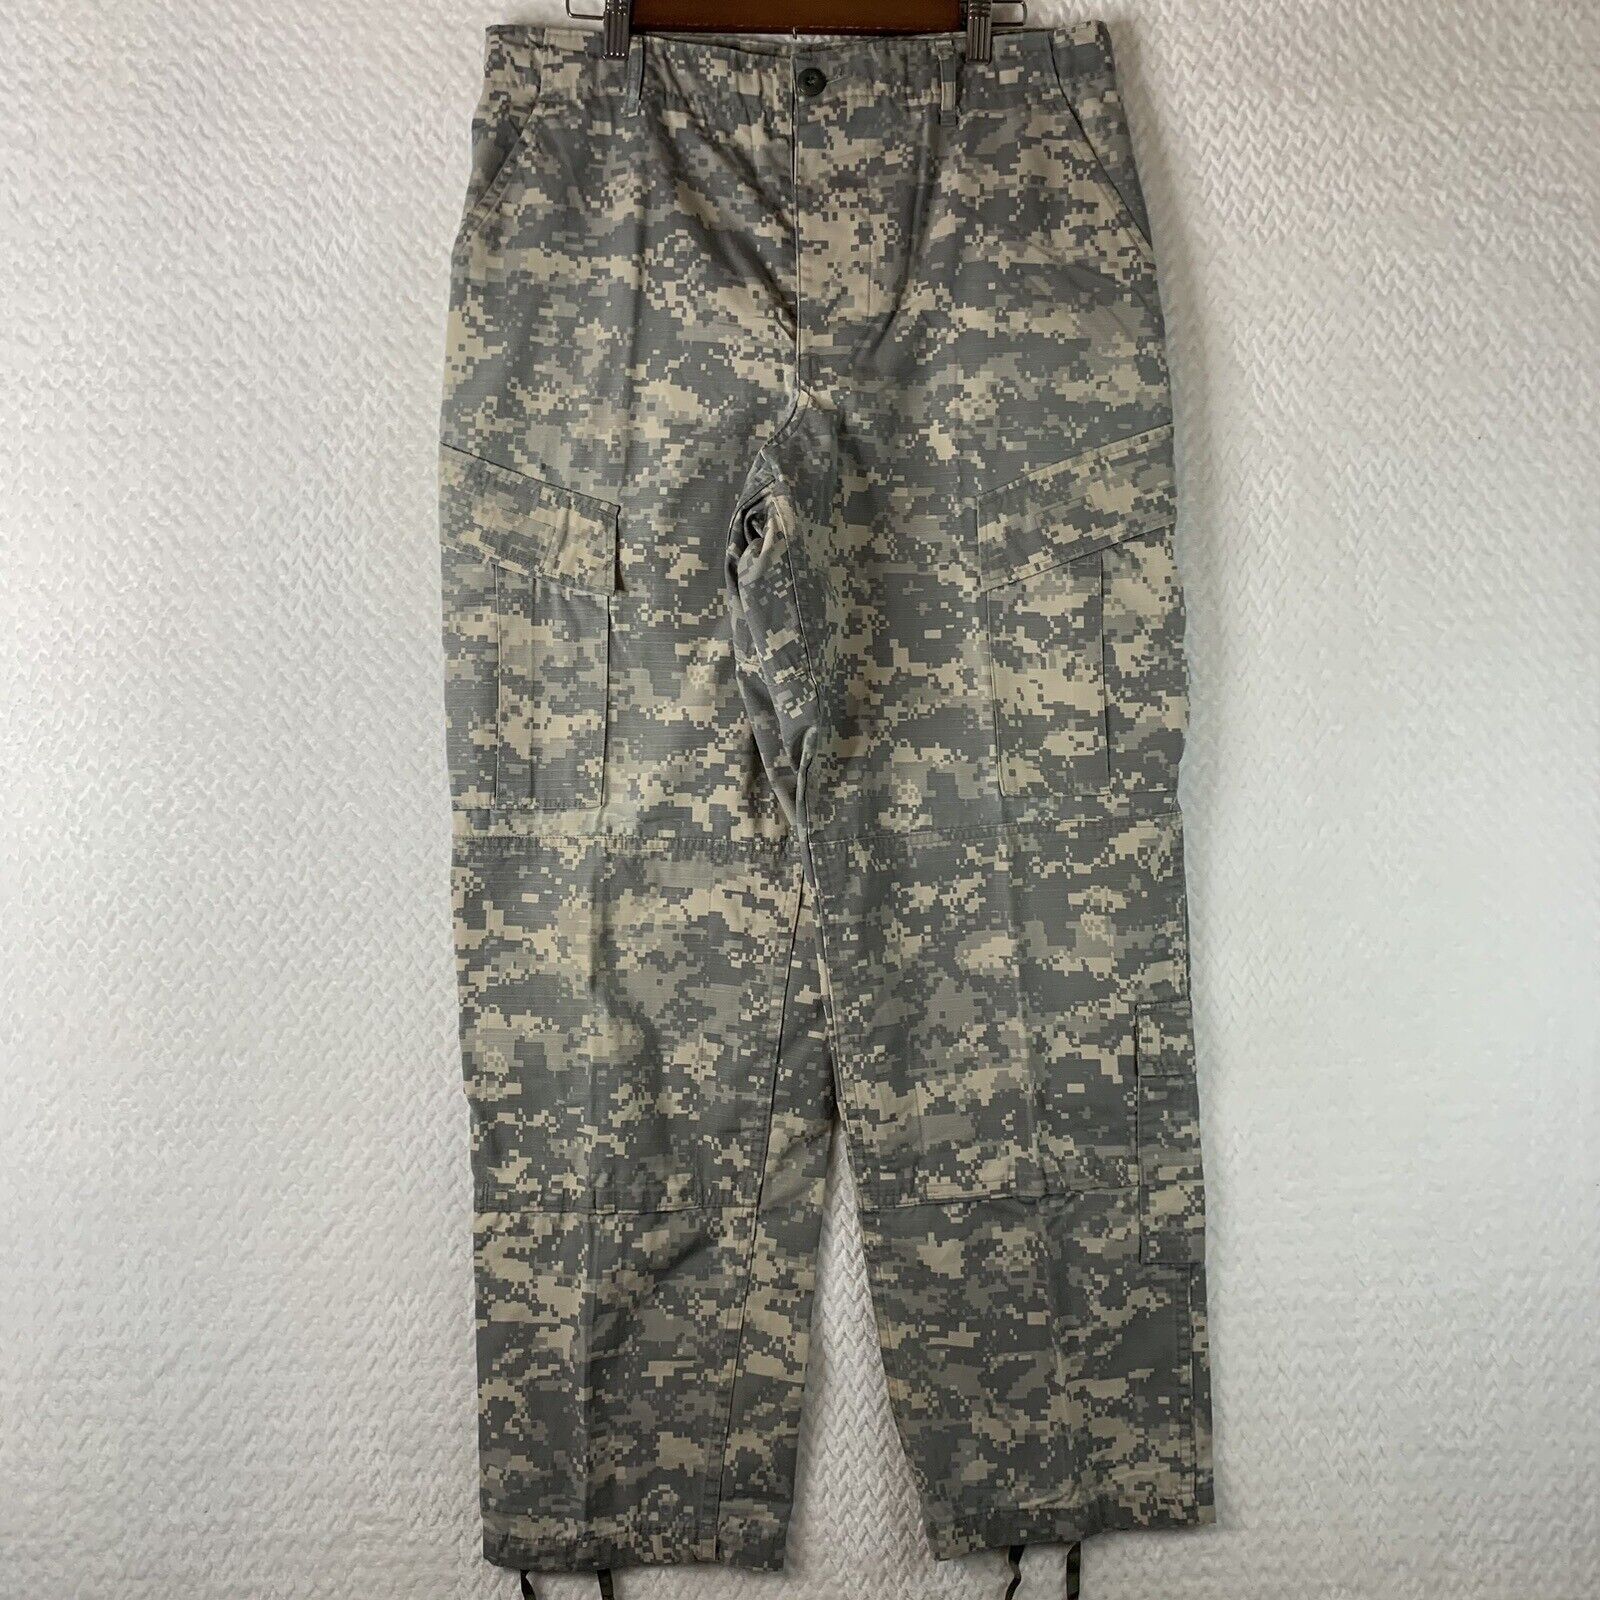 Military ACU Ripstop Cargo Pants Trousers Digital Camo Size Medium Regular